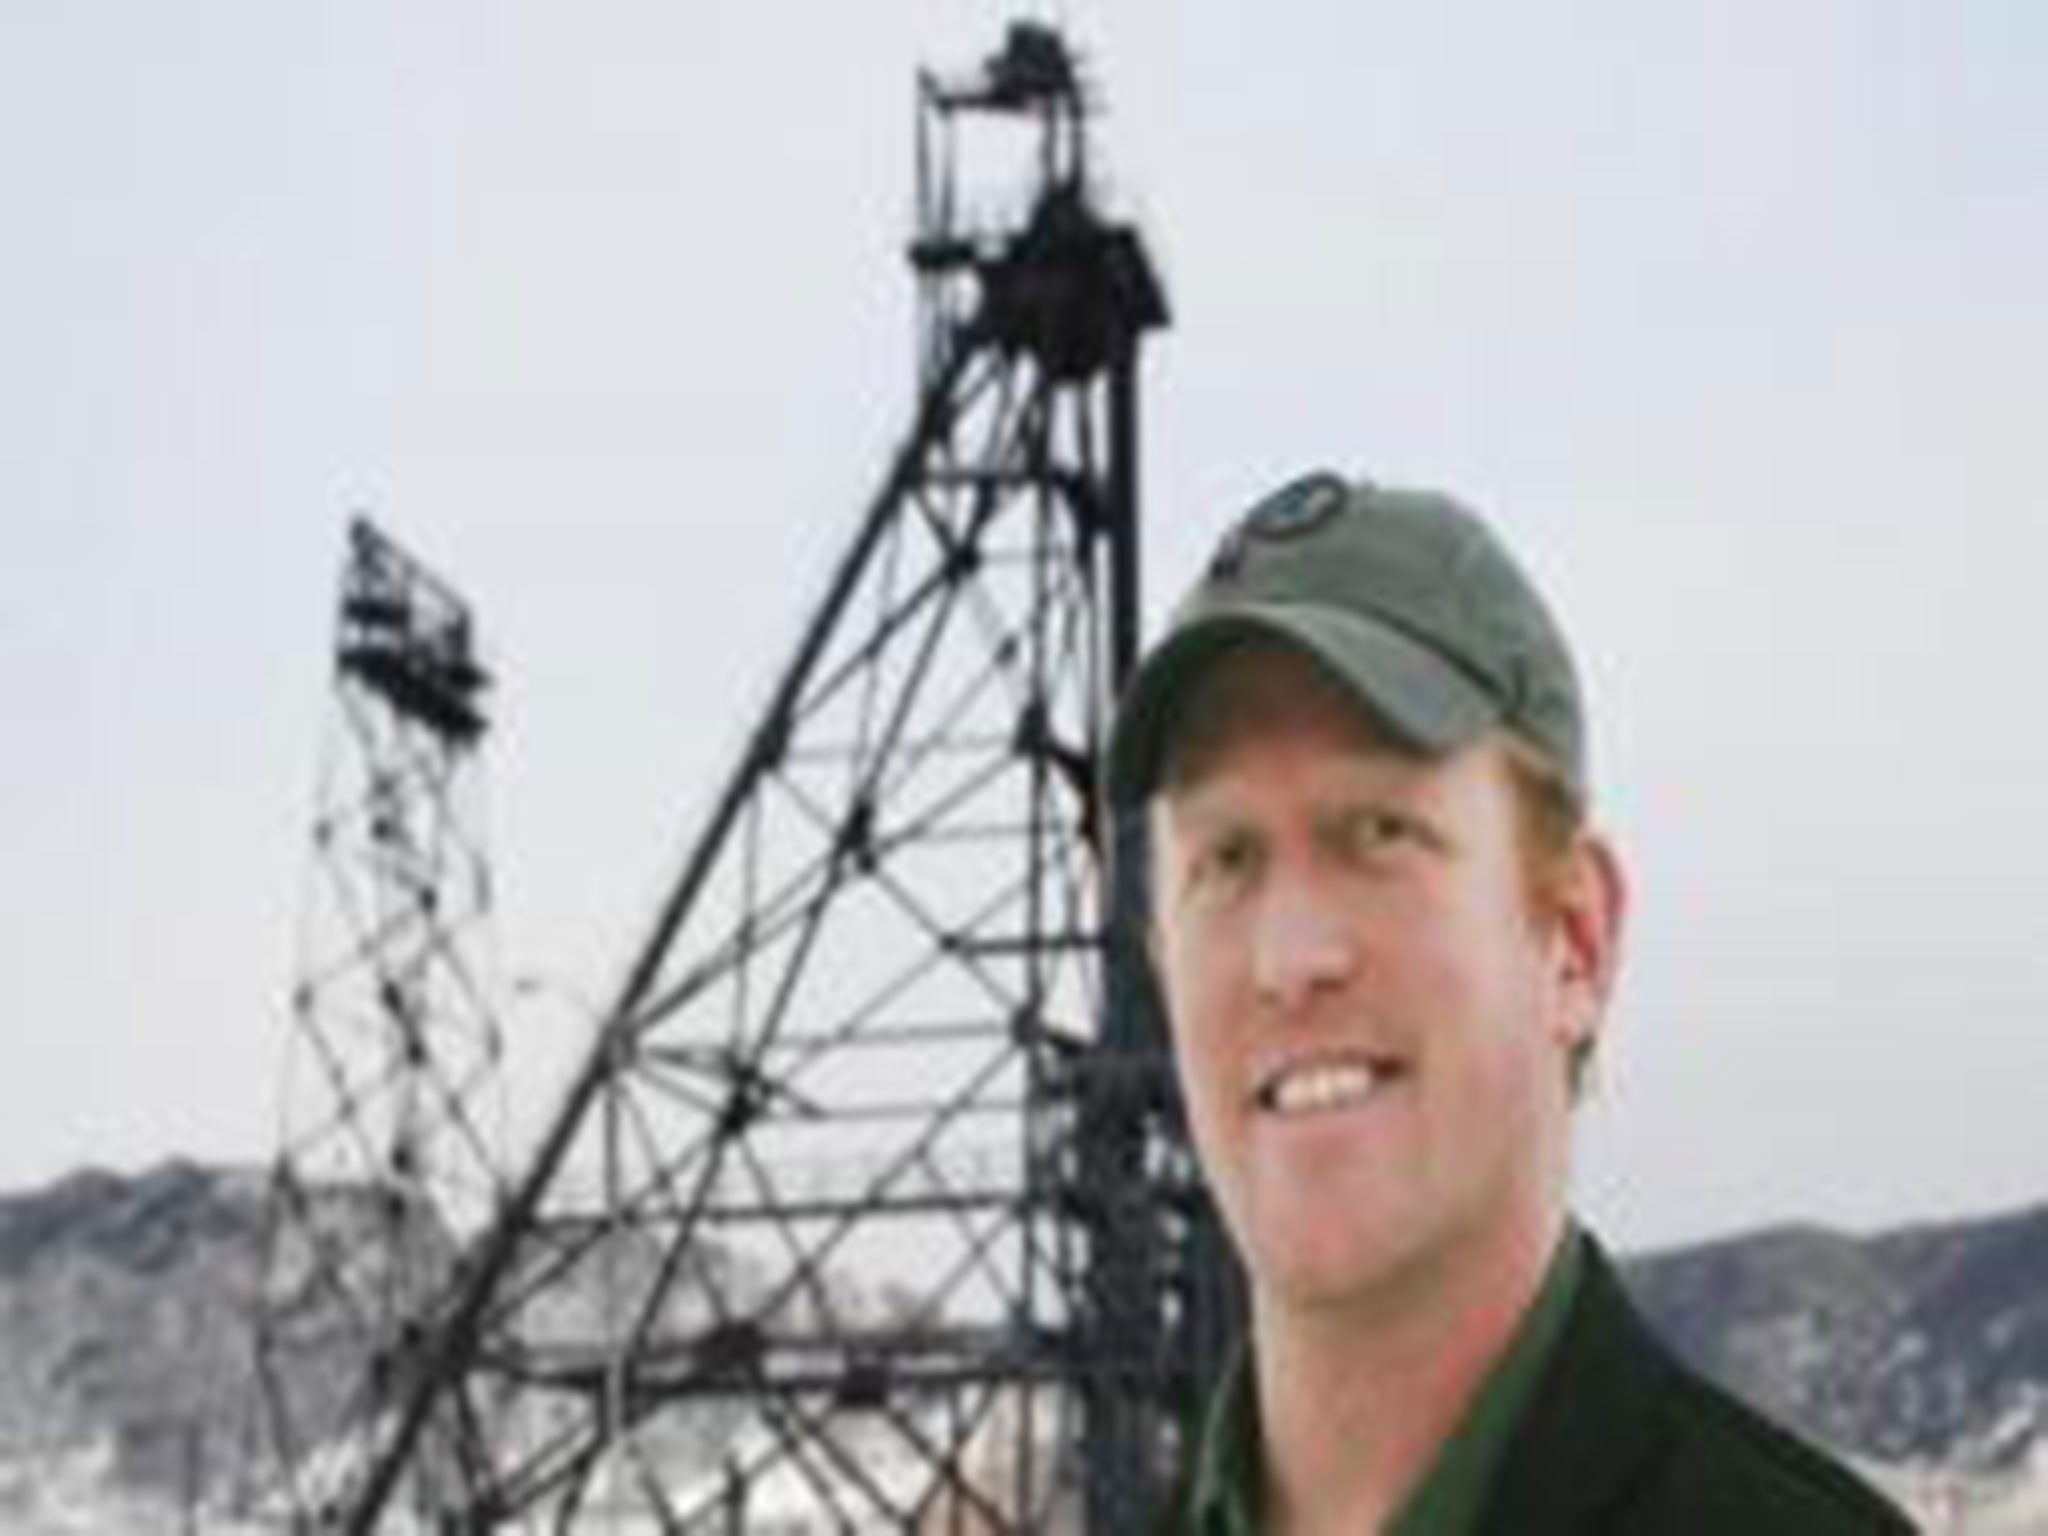 Robert O'Neill, a former Navy SEAL team six member, said he fired the shot that killed Osama Bin Laden